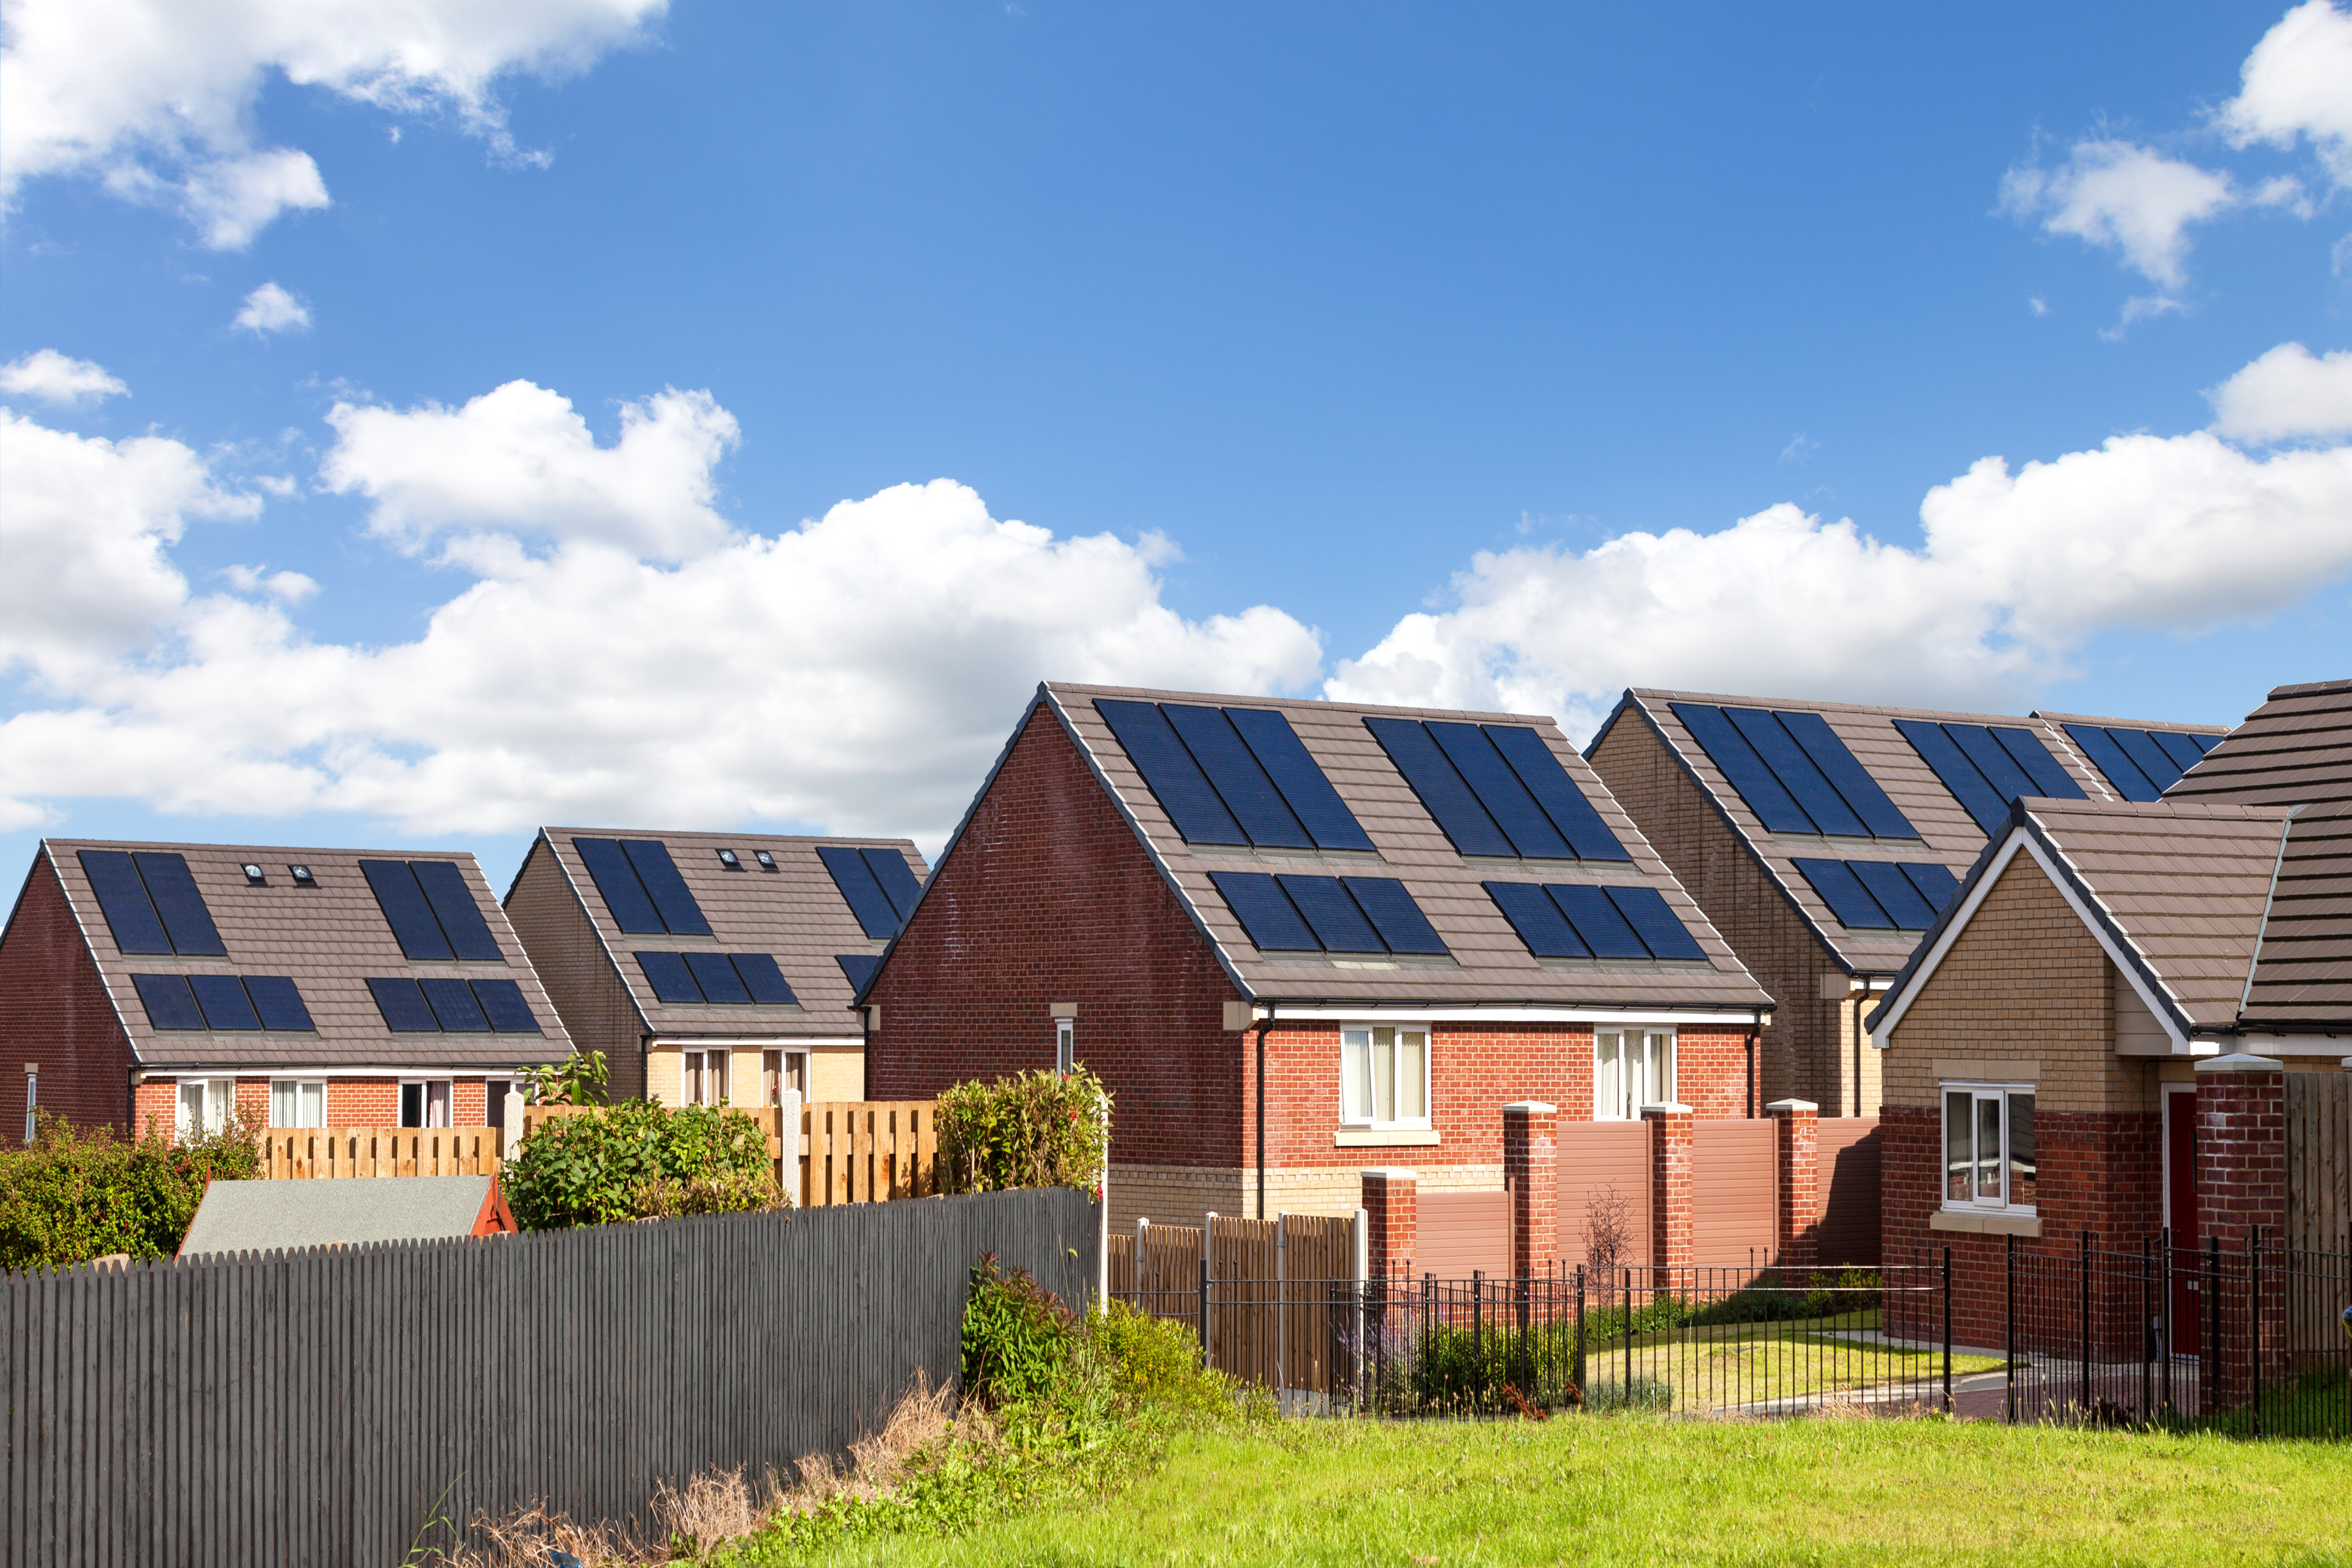 Innovative scheme promises keenly priced solar panels